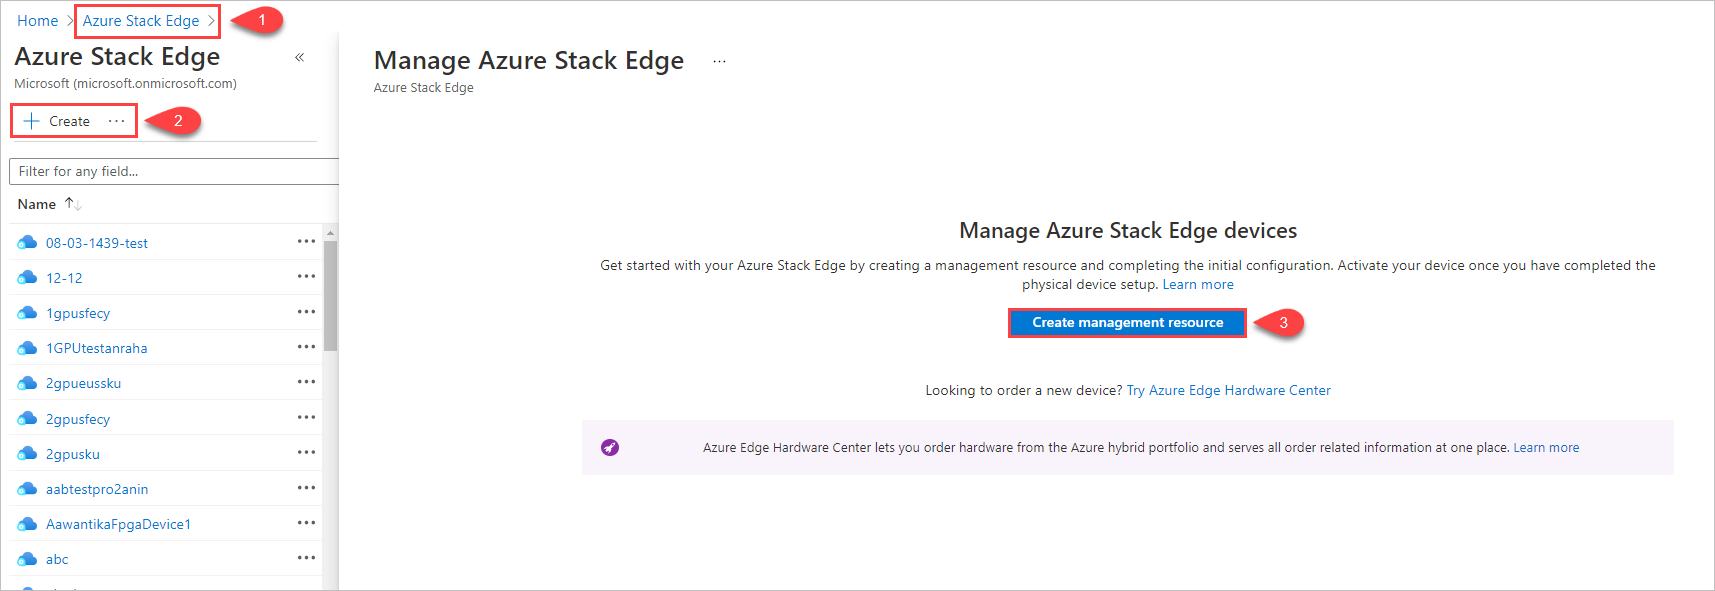 Illustration showing 3 steps to start management resource creation in Azure Stack Edge.